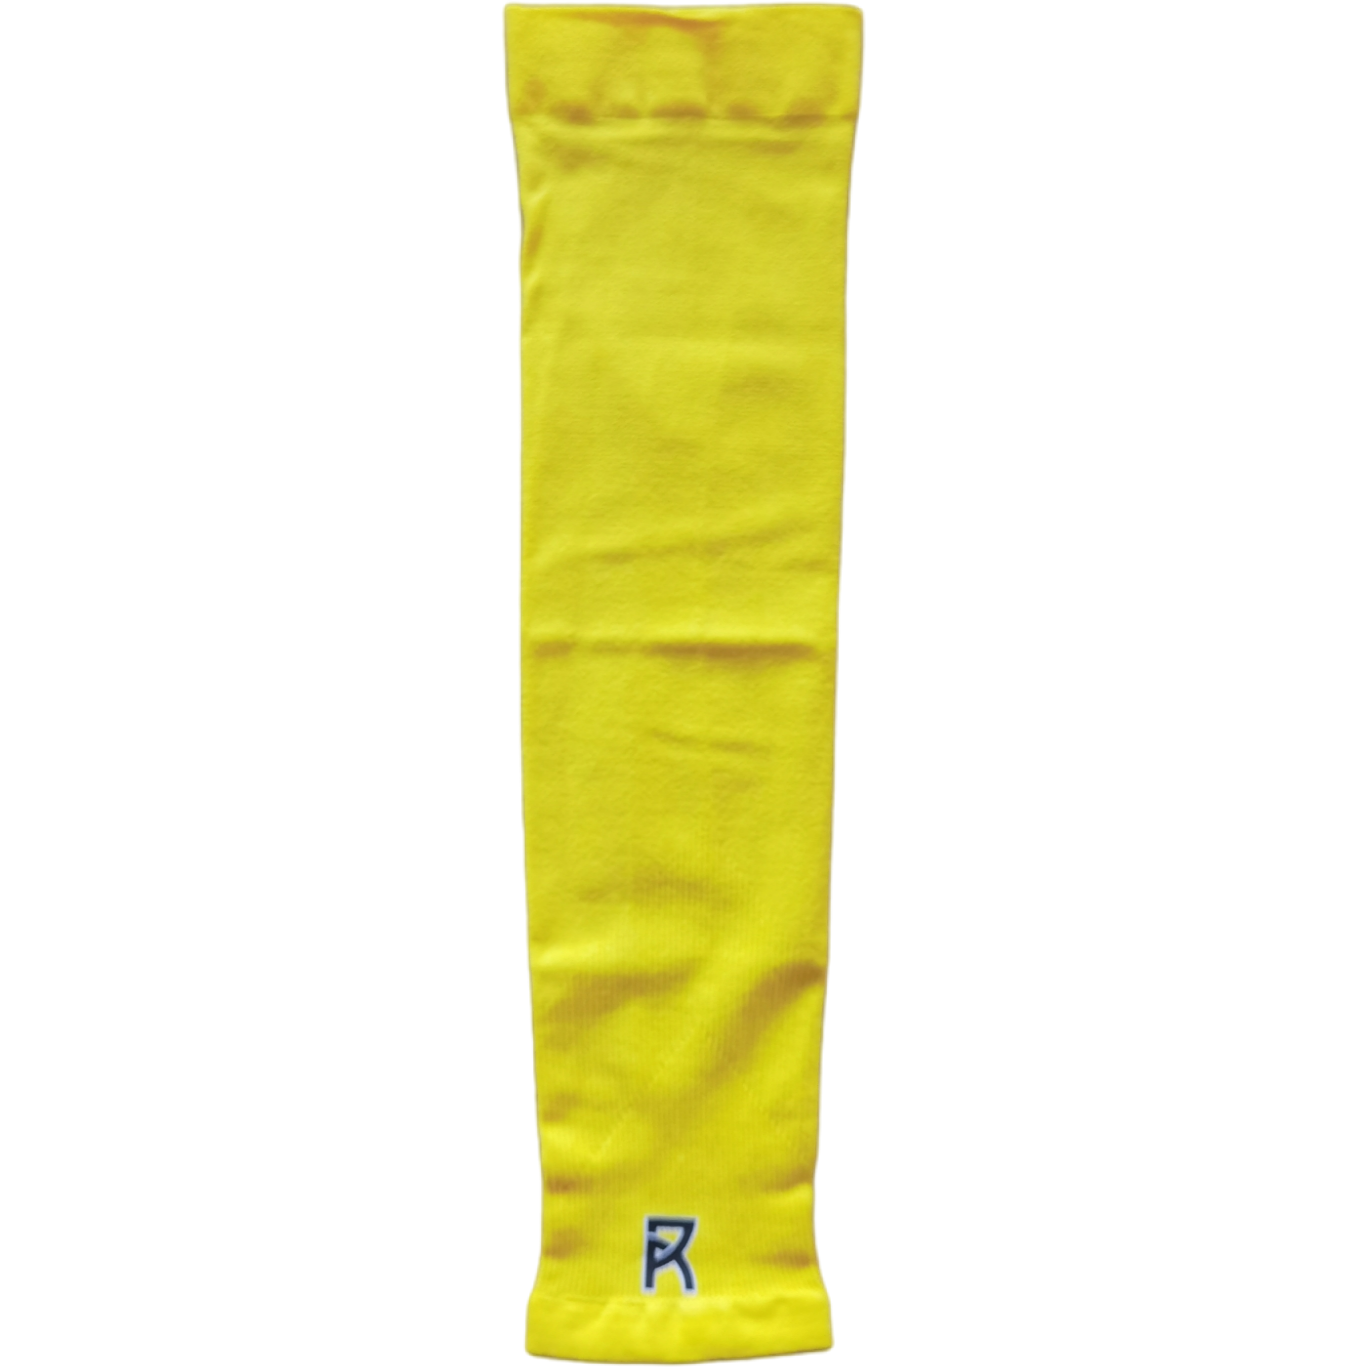 Reyrr Compression Arm Sleeves 2-pack - Premium Sleeve from Reyrr Athletics - Just 199 SEK! Shop now at Reyrr Athletics